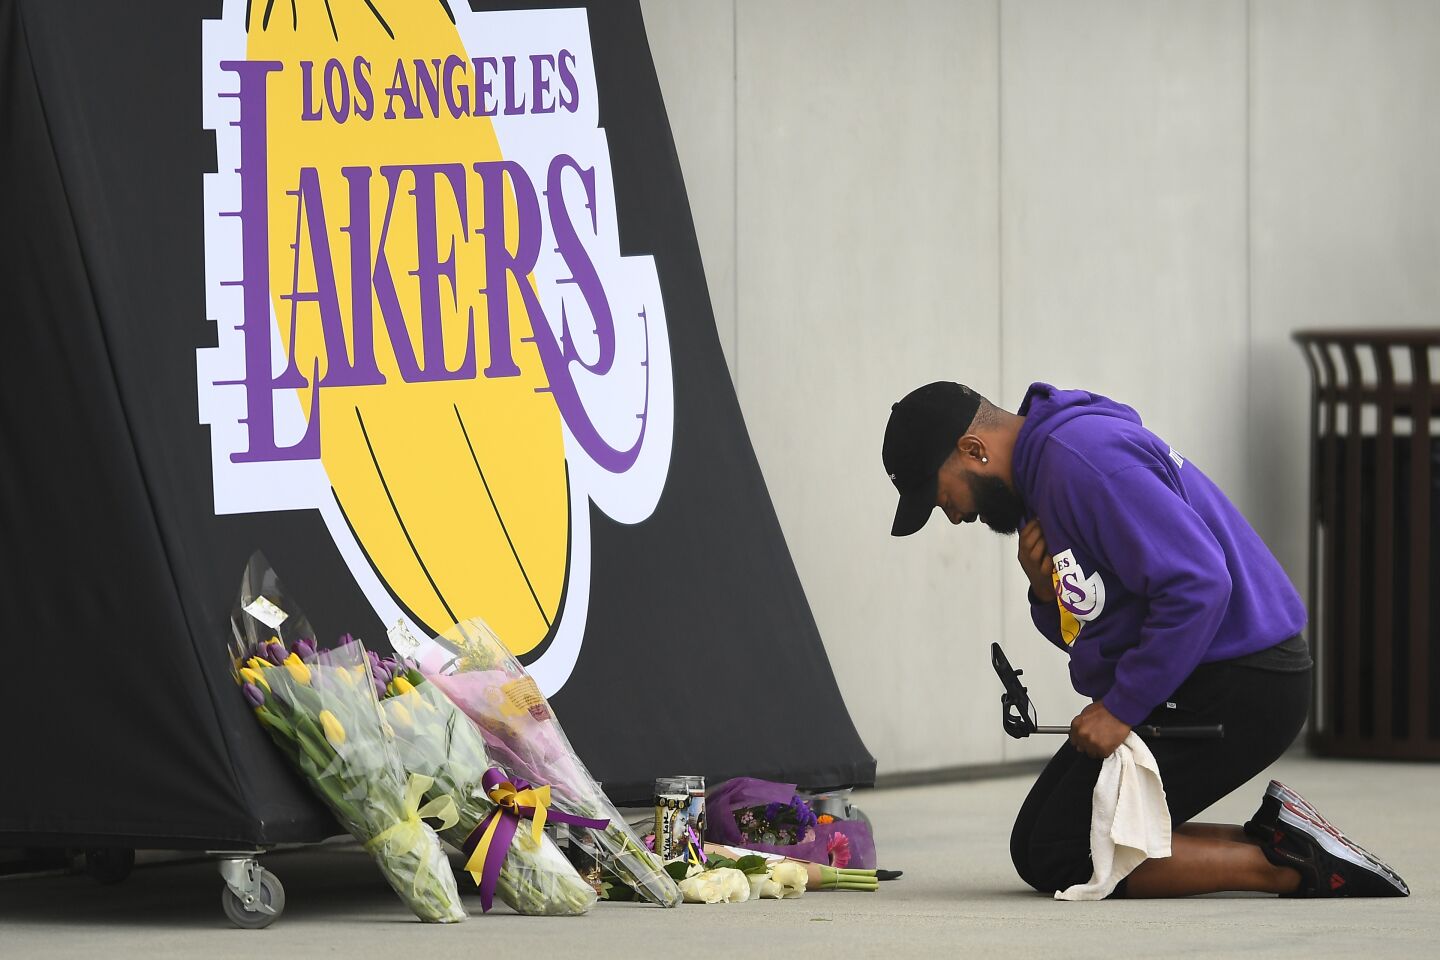 Memorial to Kobe Bryant at Lakers practice facility